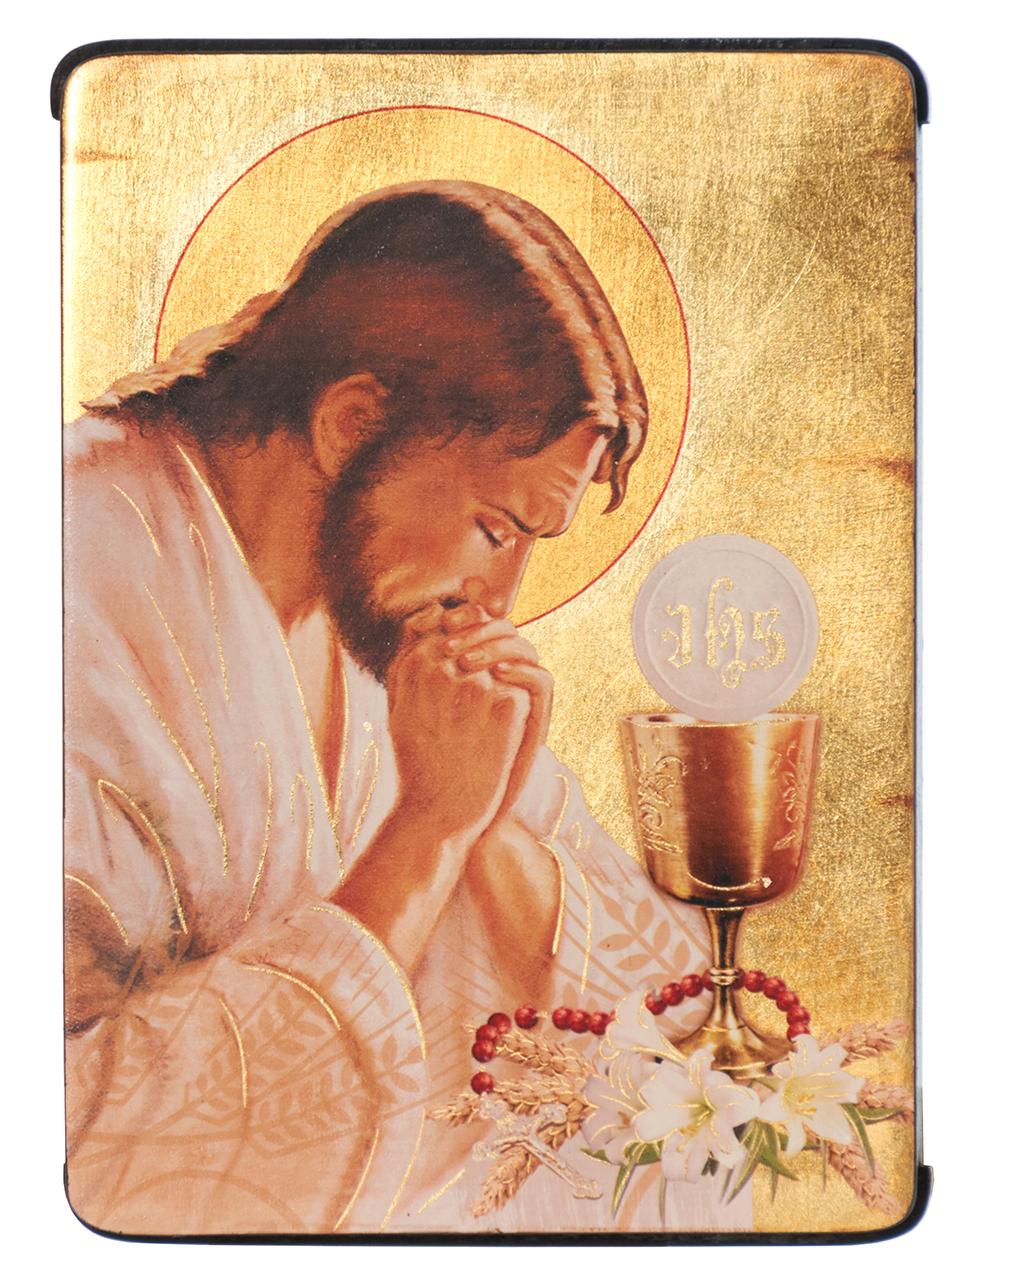 ikon-kep-imadkozo-jezus-115x17-cm